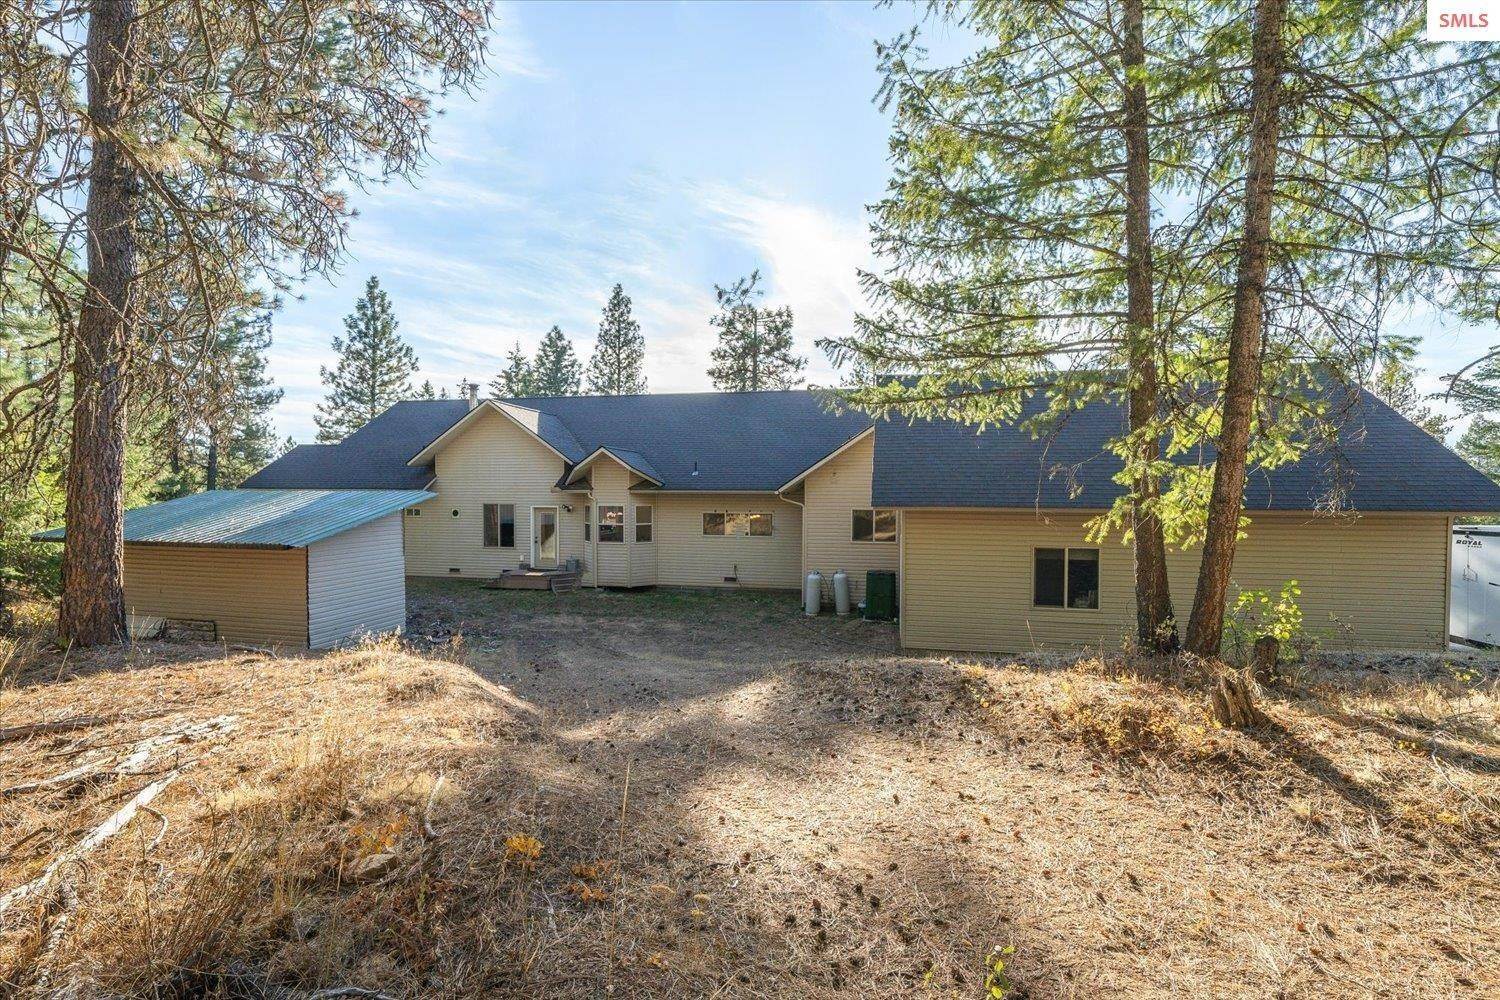 39. Single Family Homes for Sale at 571 N Cedar View Estates Blanchard, Idaho 83804 United States